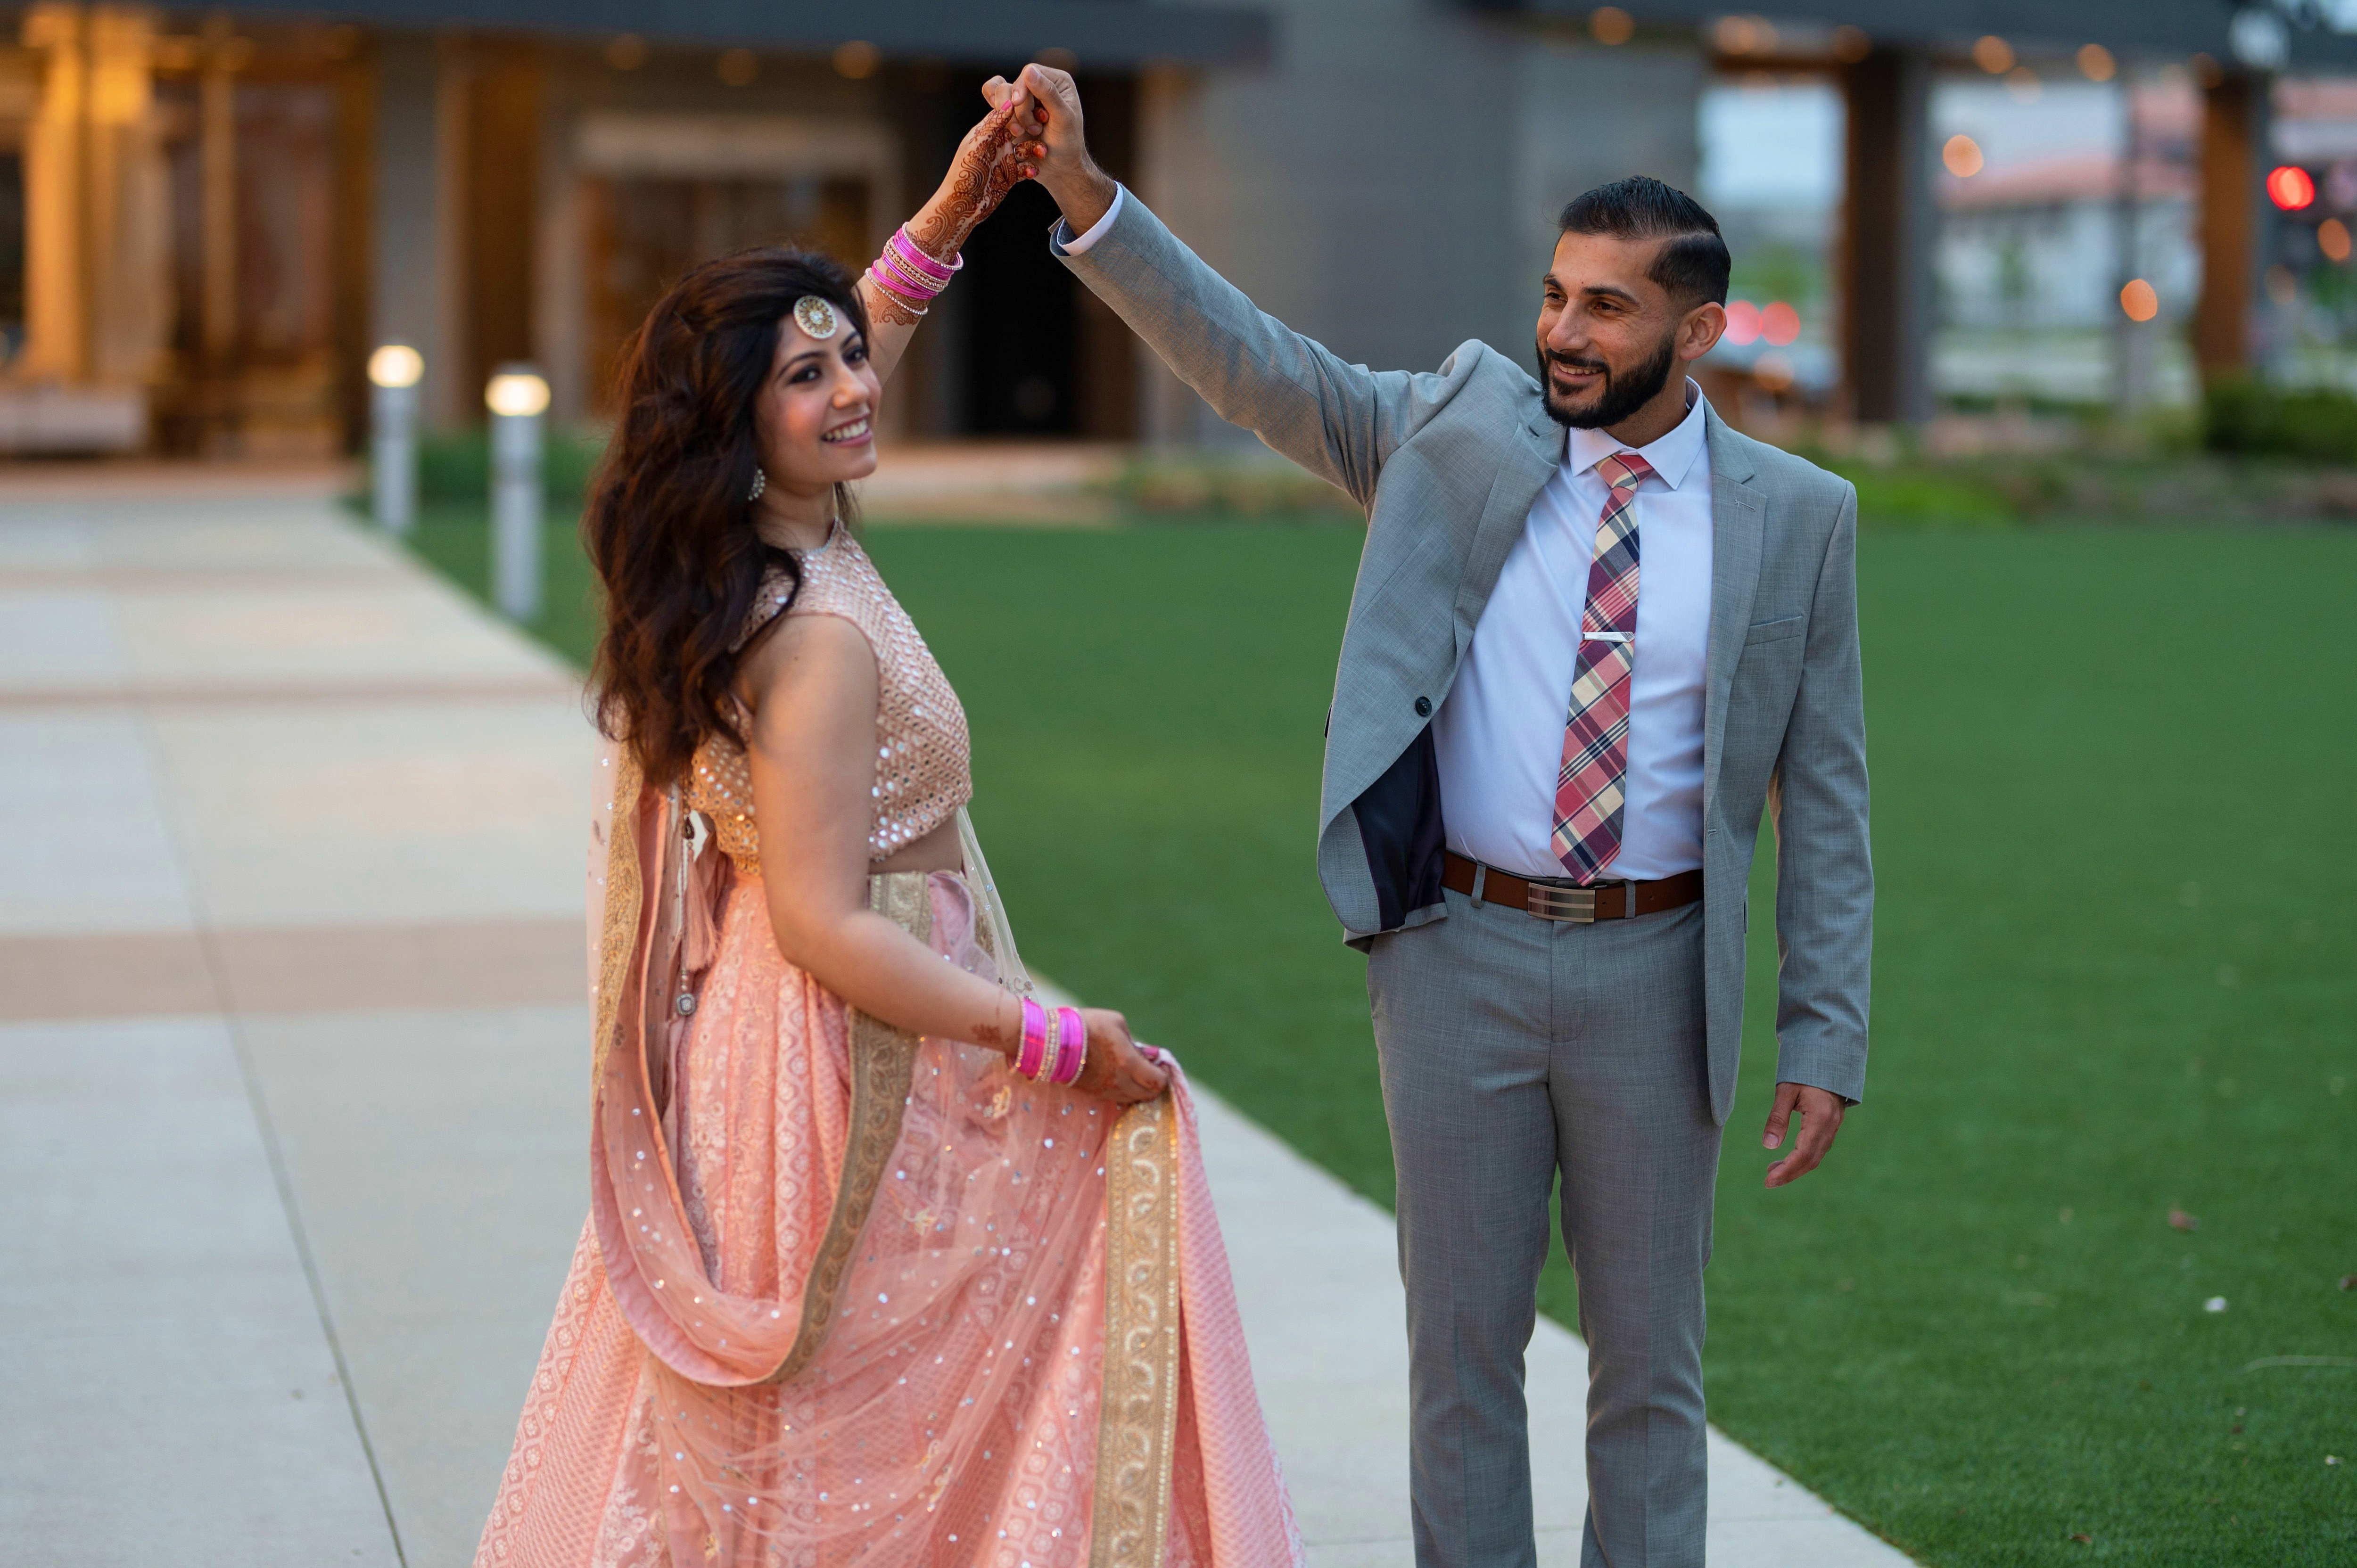 The Wedding Website of Khadija Lalani and Ali Shawn Sherali